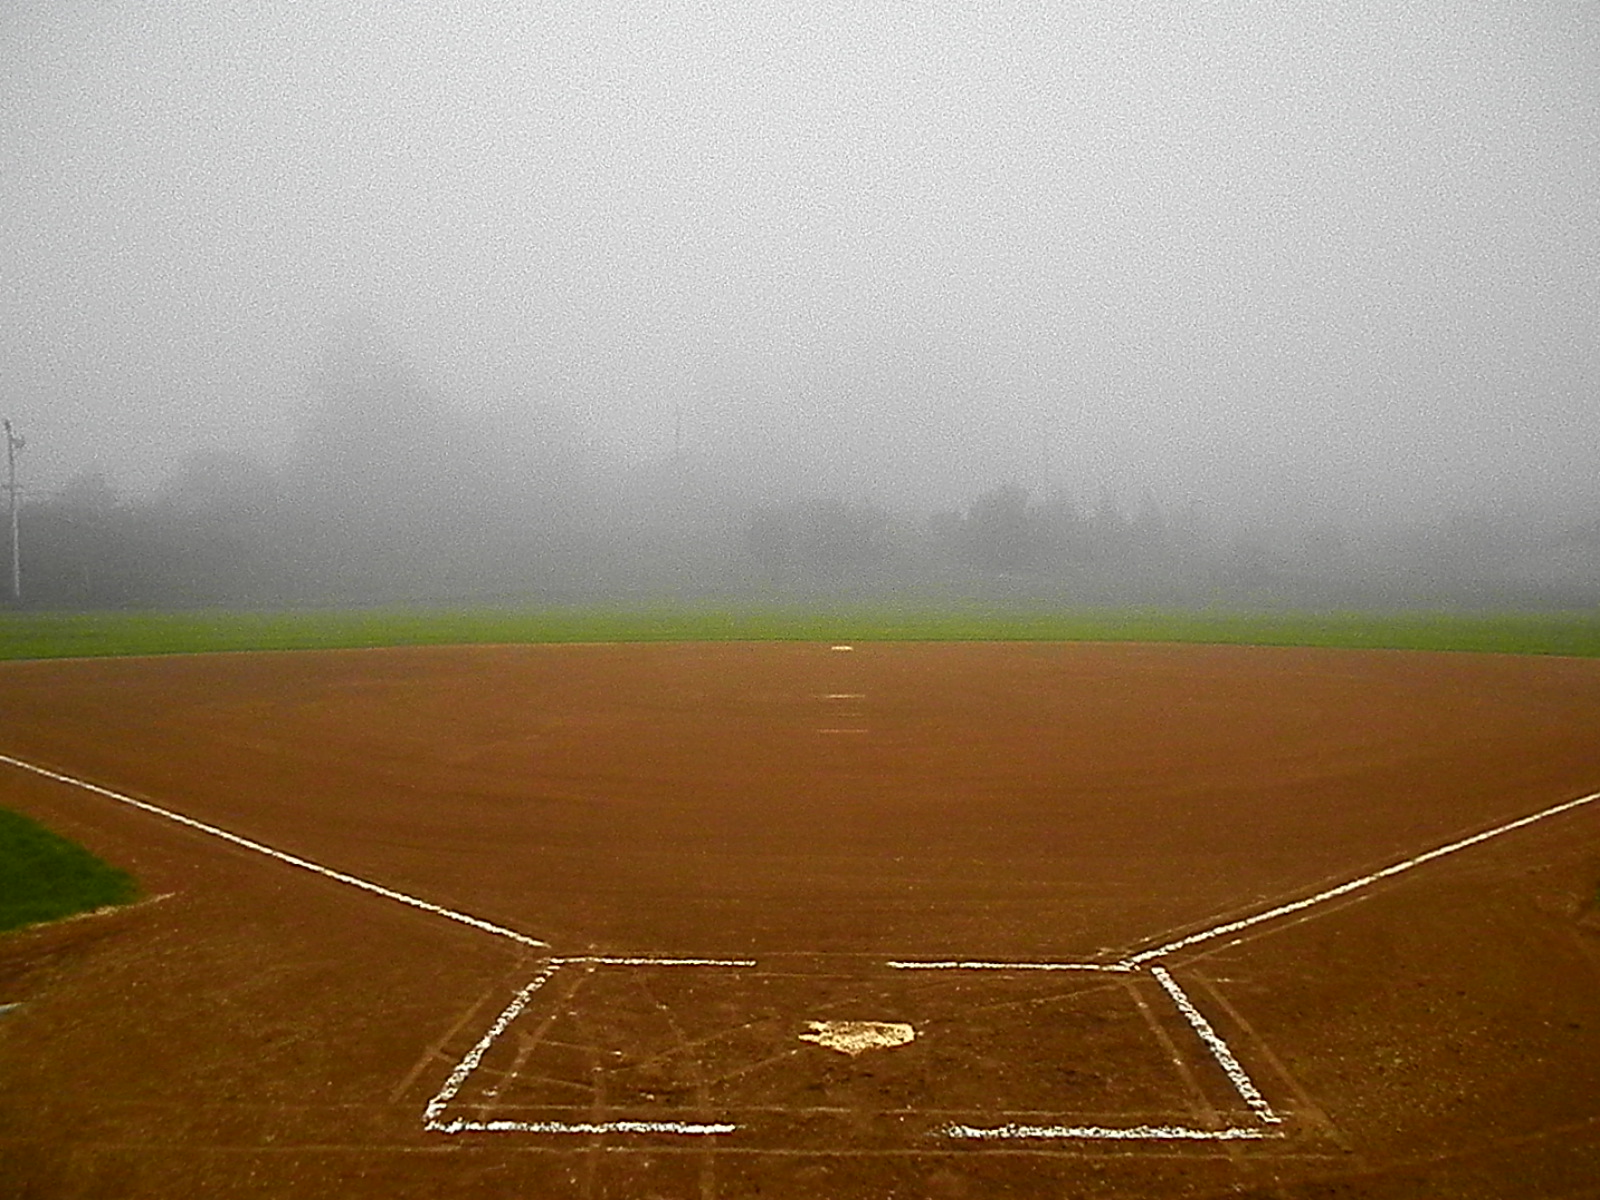 softball field background